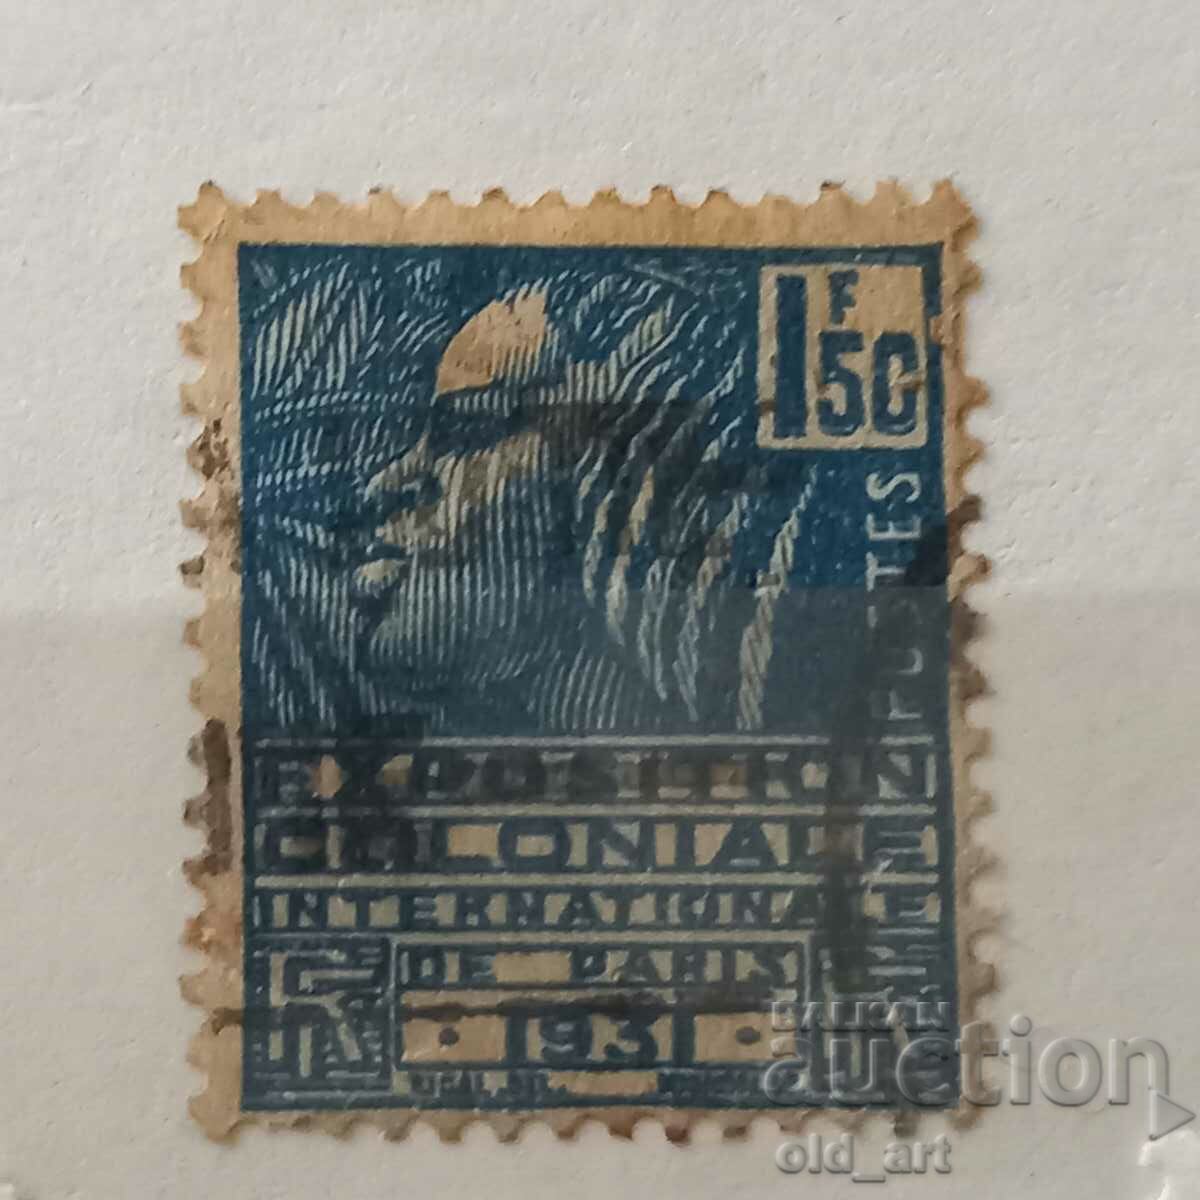 timbru poștal - Franța, Int. expoziție colonială 1930